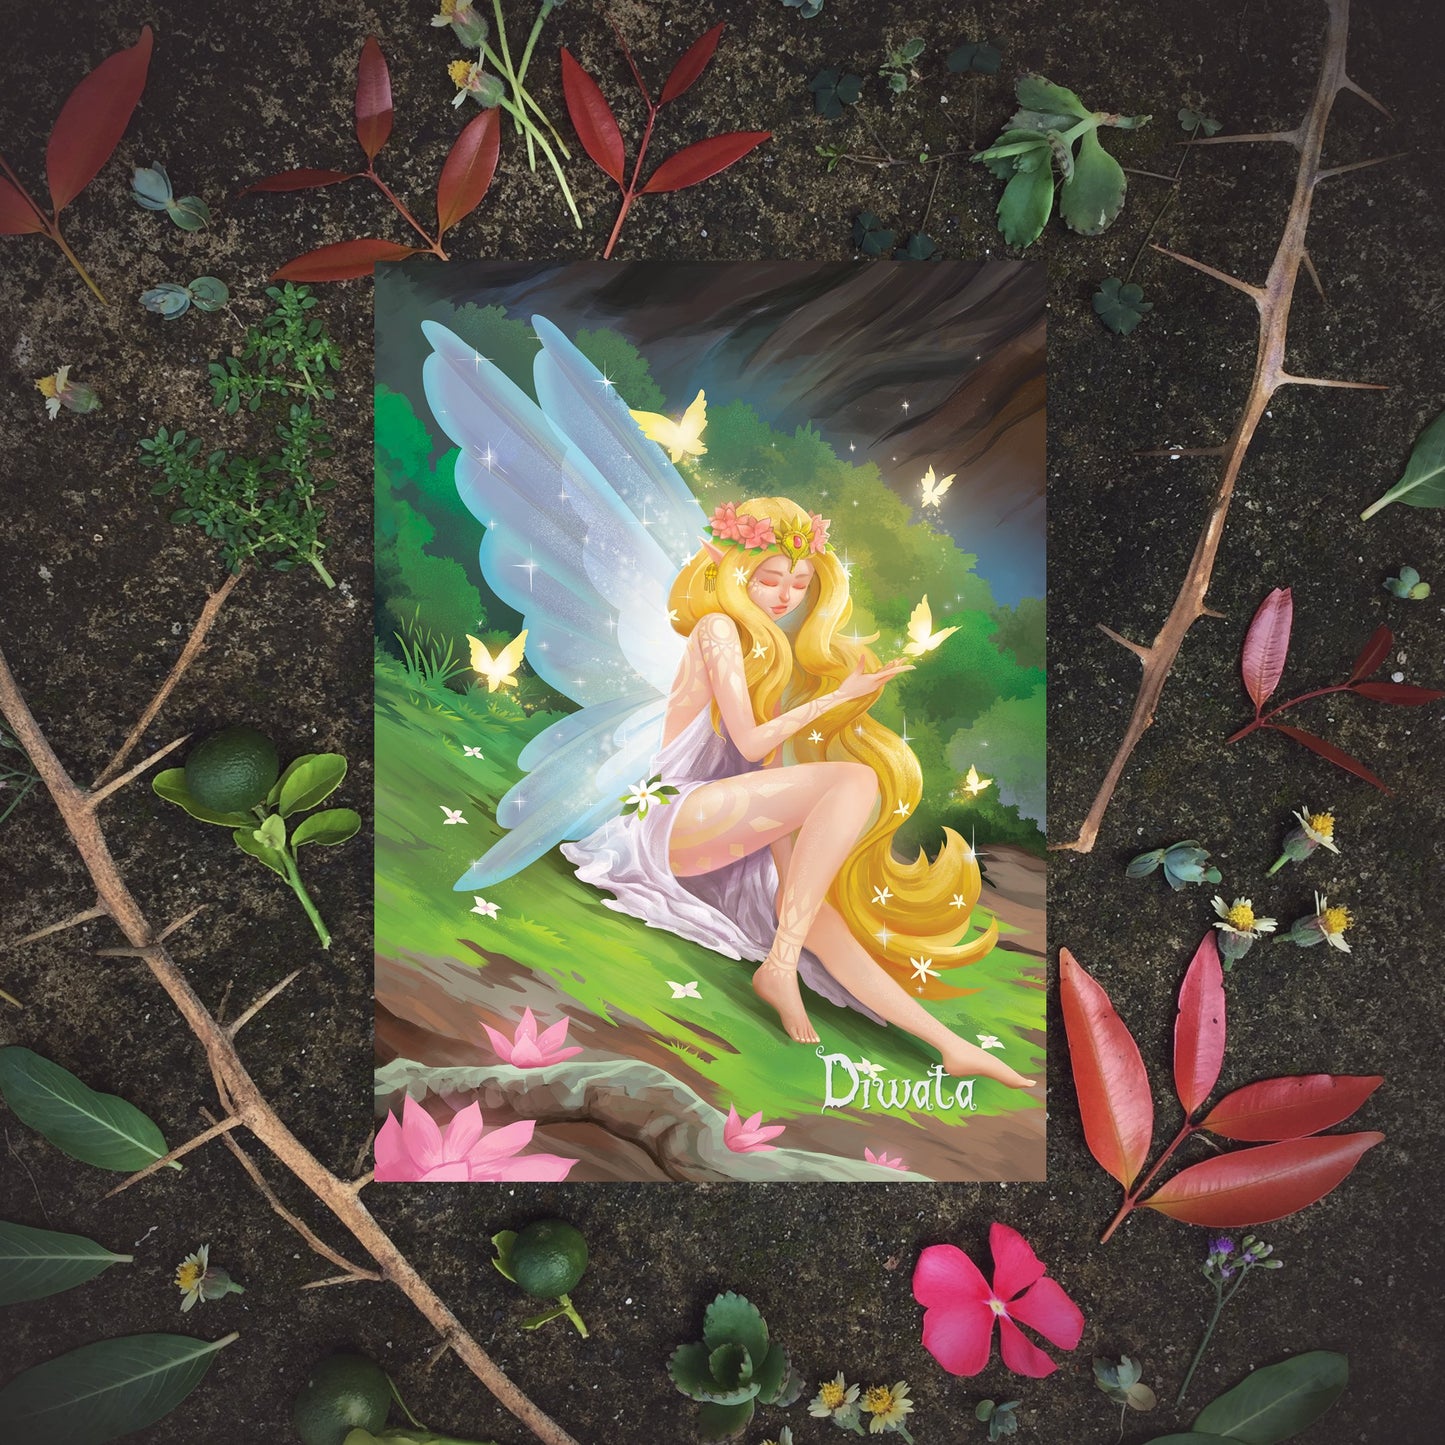 Philippine mythology mythical creature supernatural pinoy legend art fantasy myth spirit nature collectible fairy mail postcrossing Folklore 